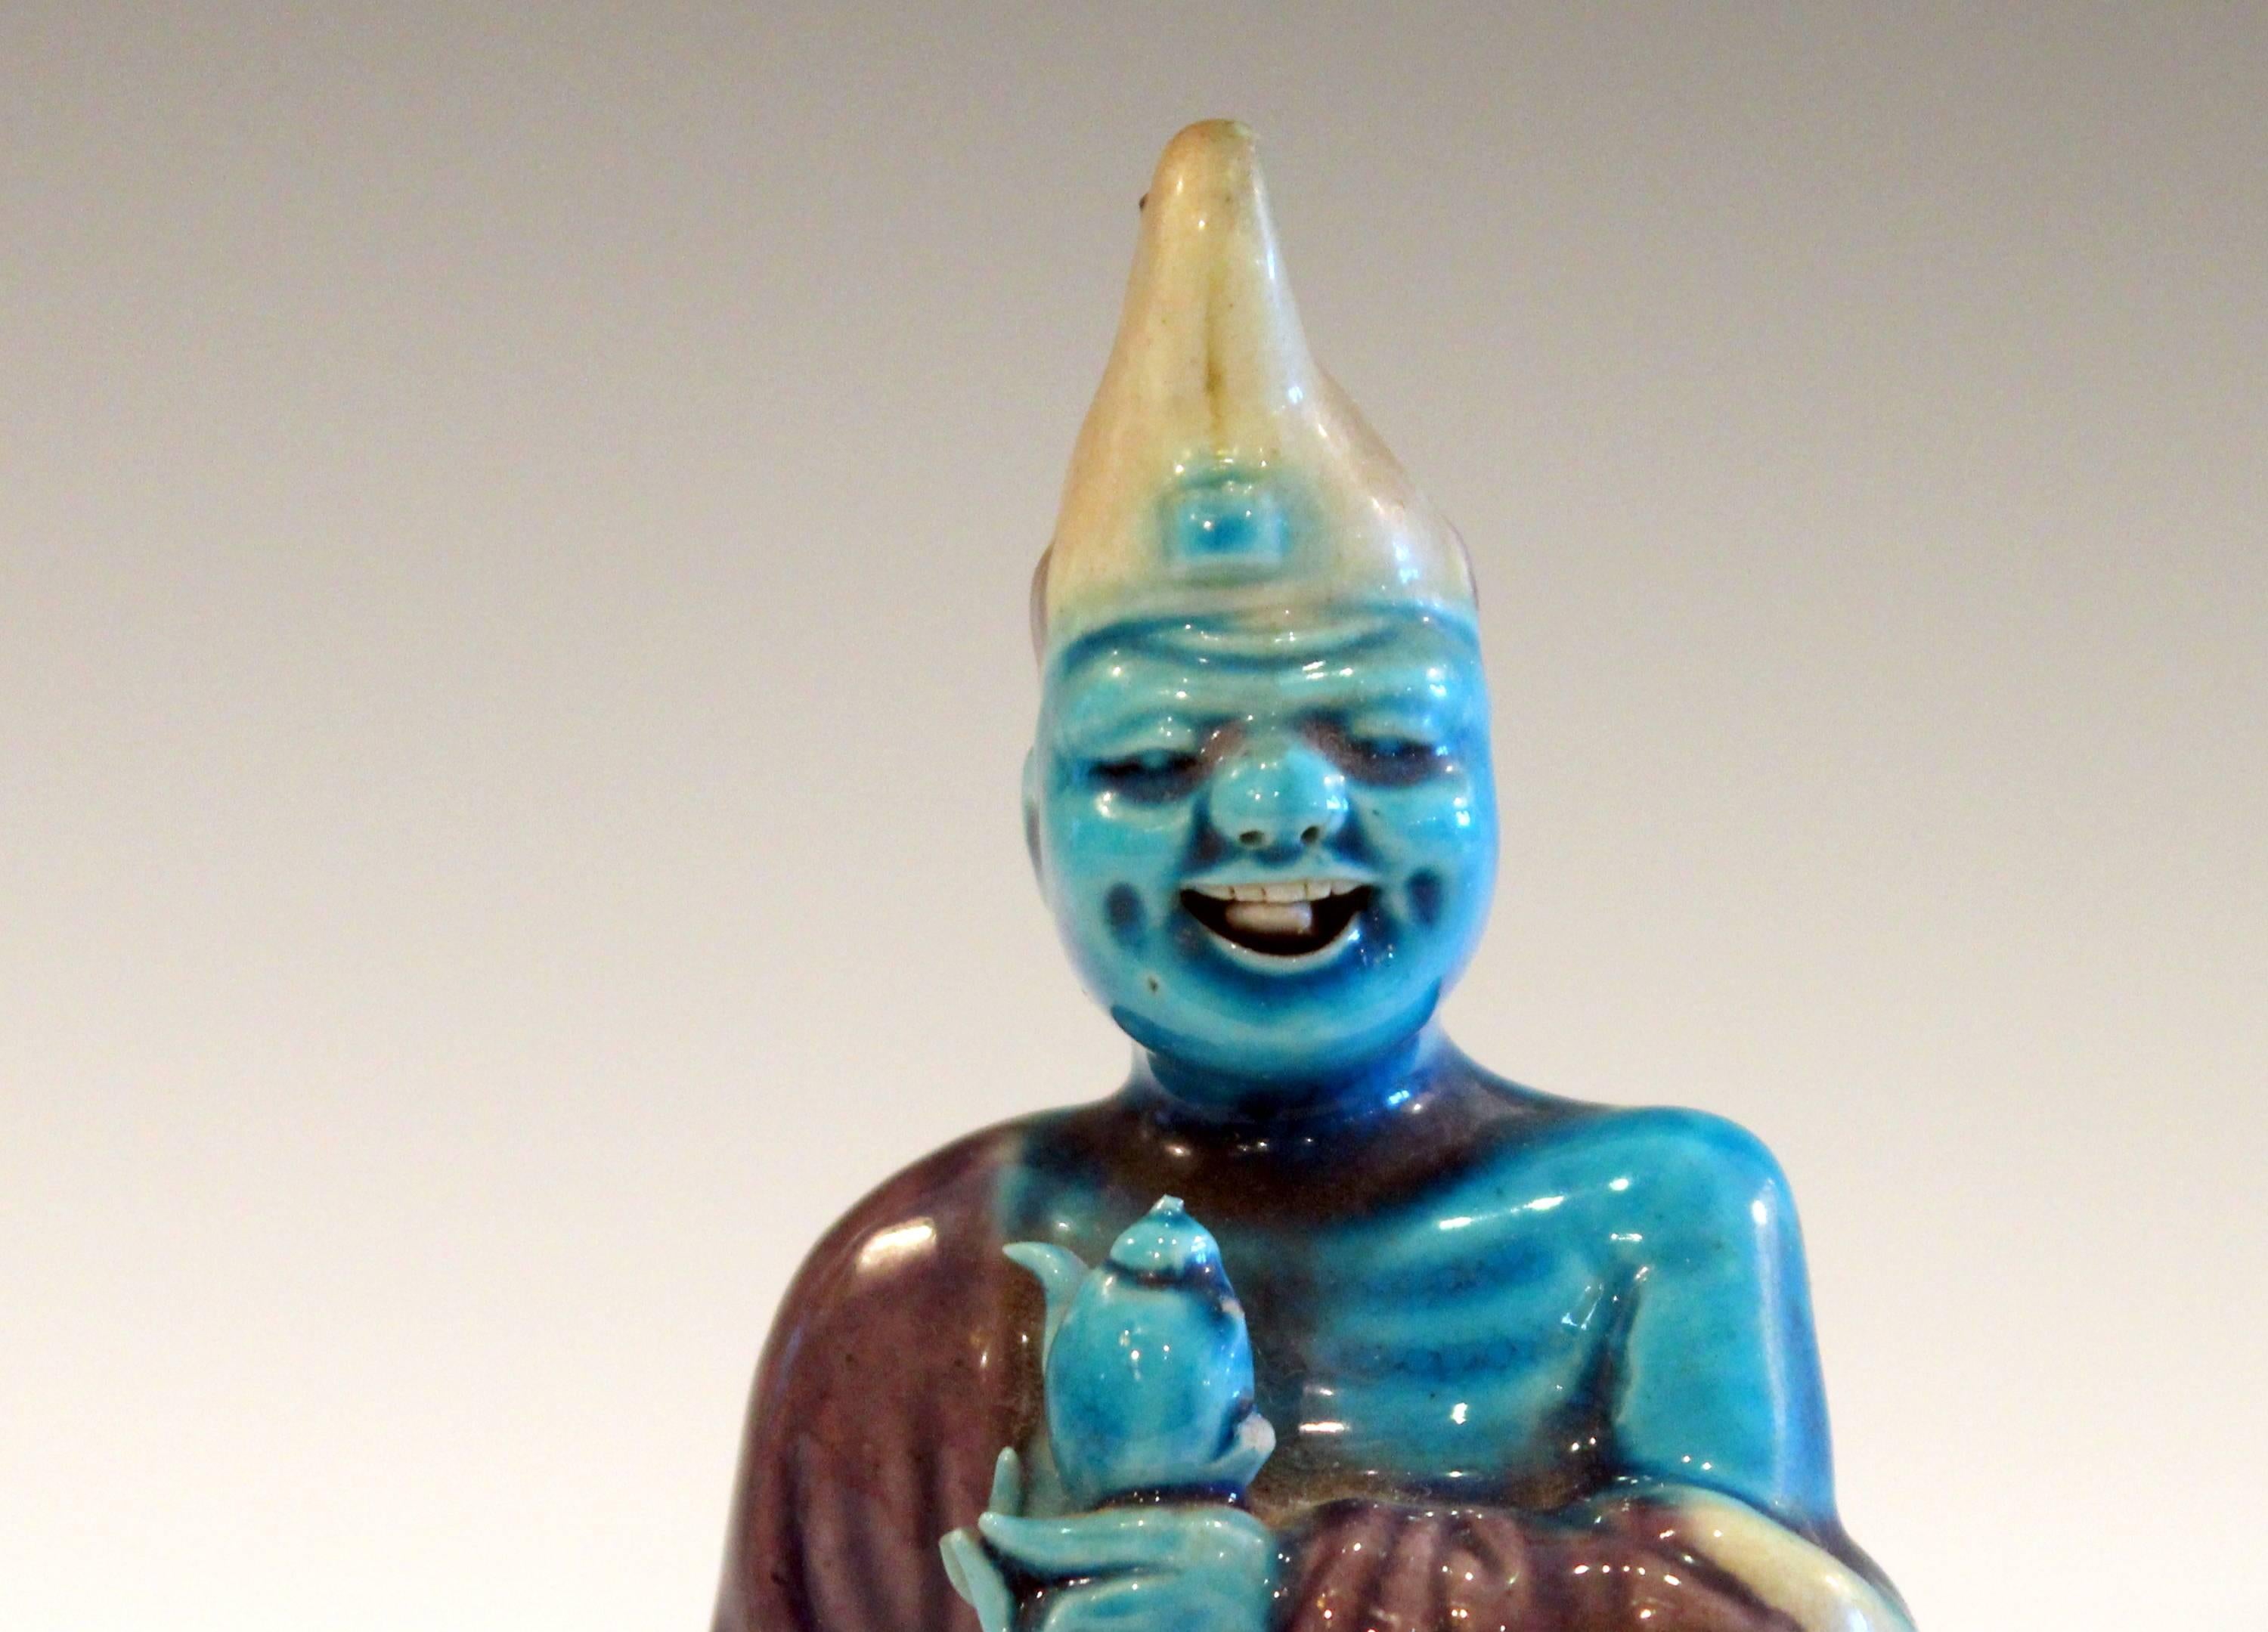 Molded Old or Antique Chinese Porcelain Buddha Nodder Bobblehead Spirit Naughty Figure